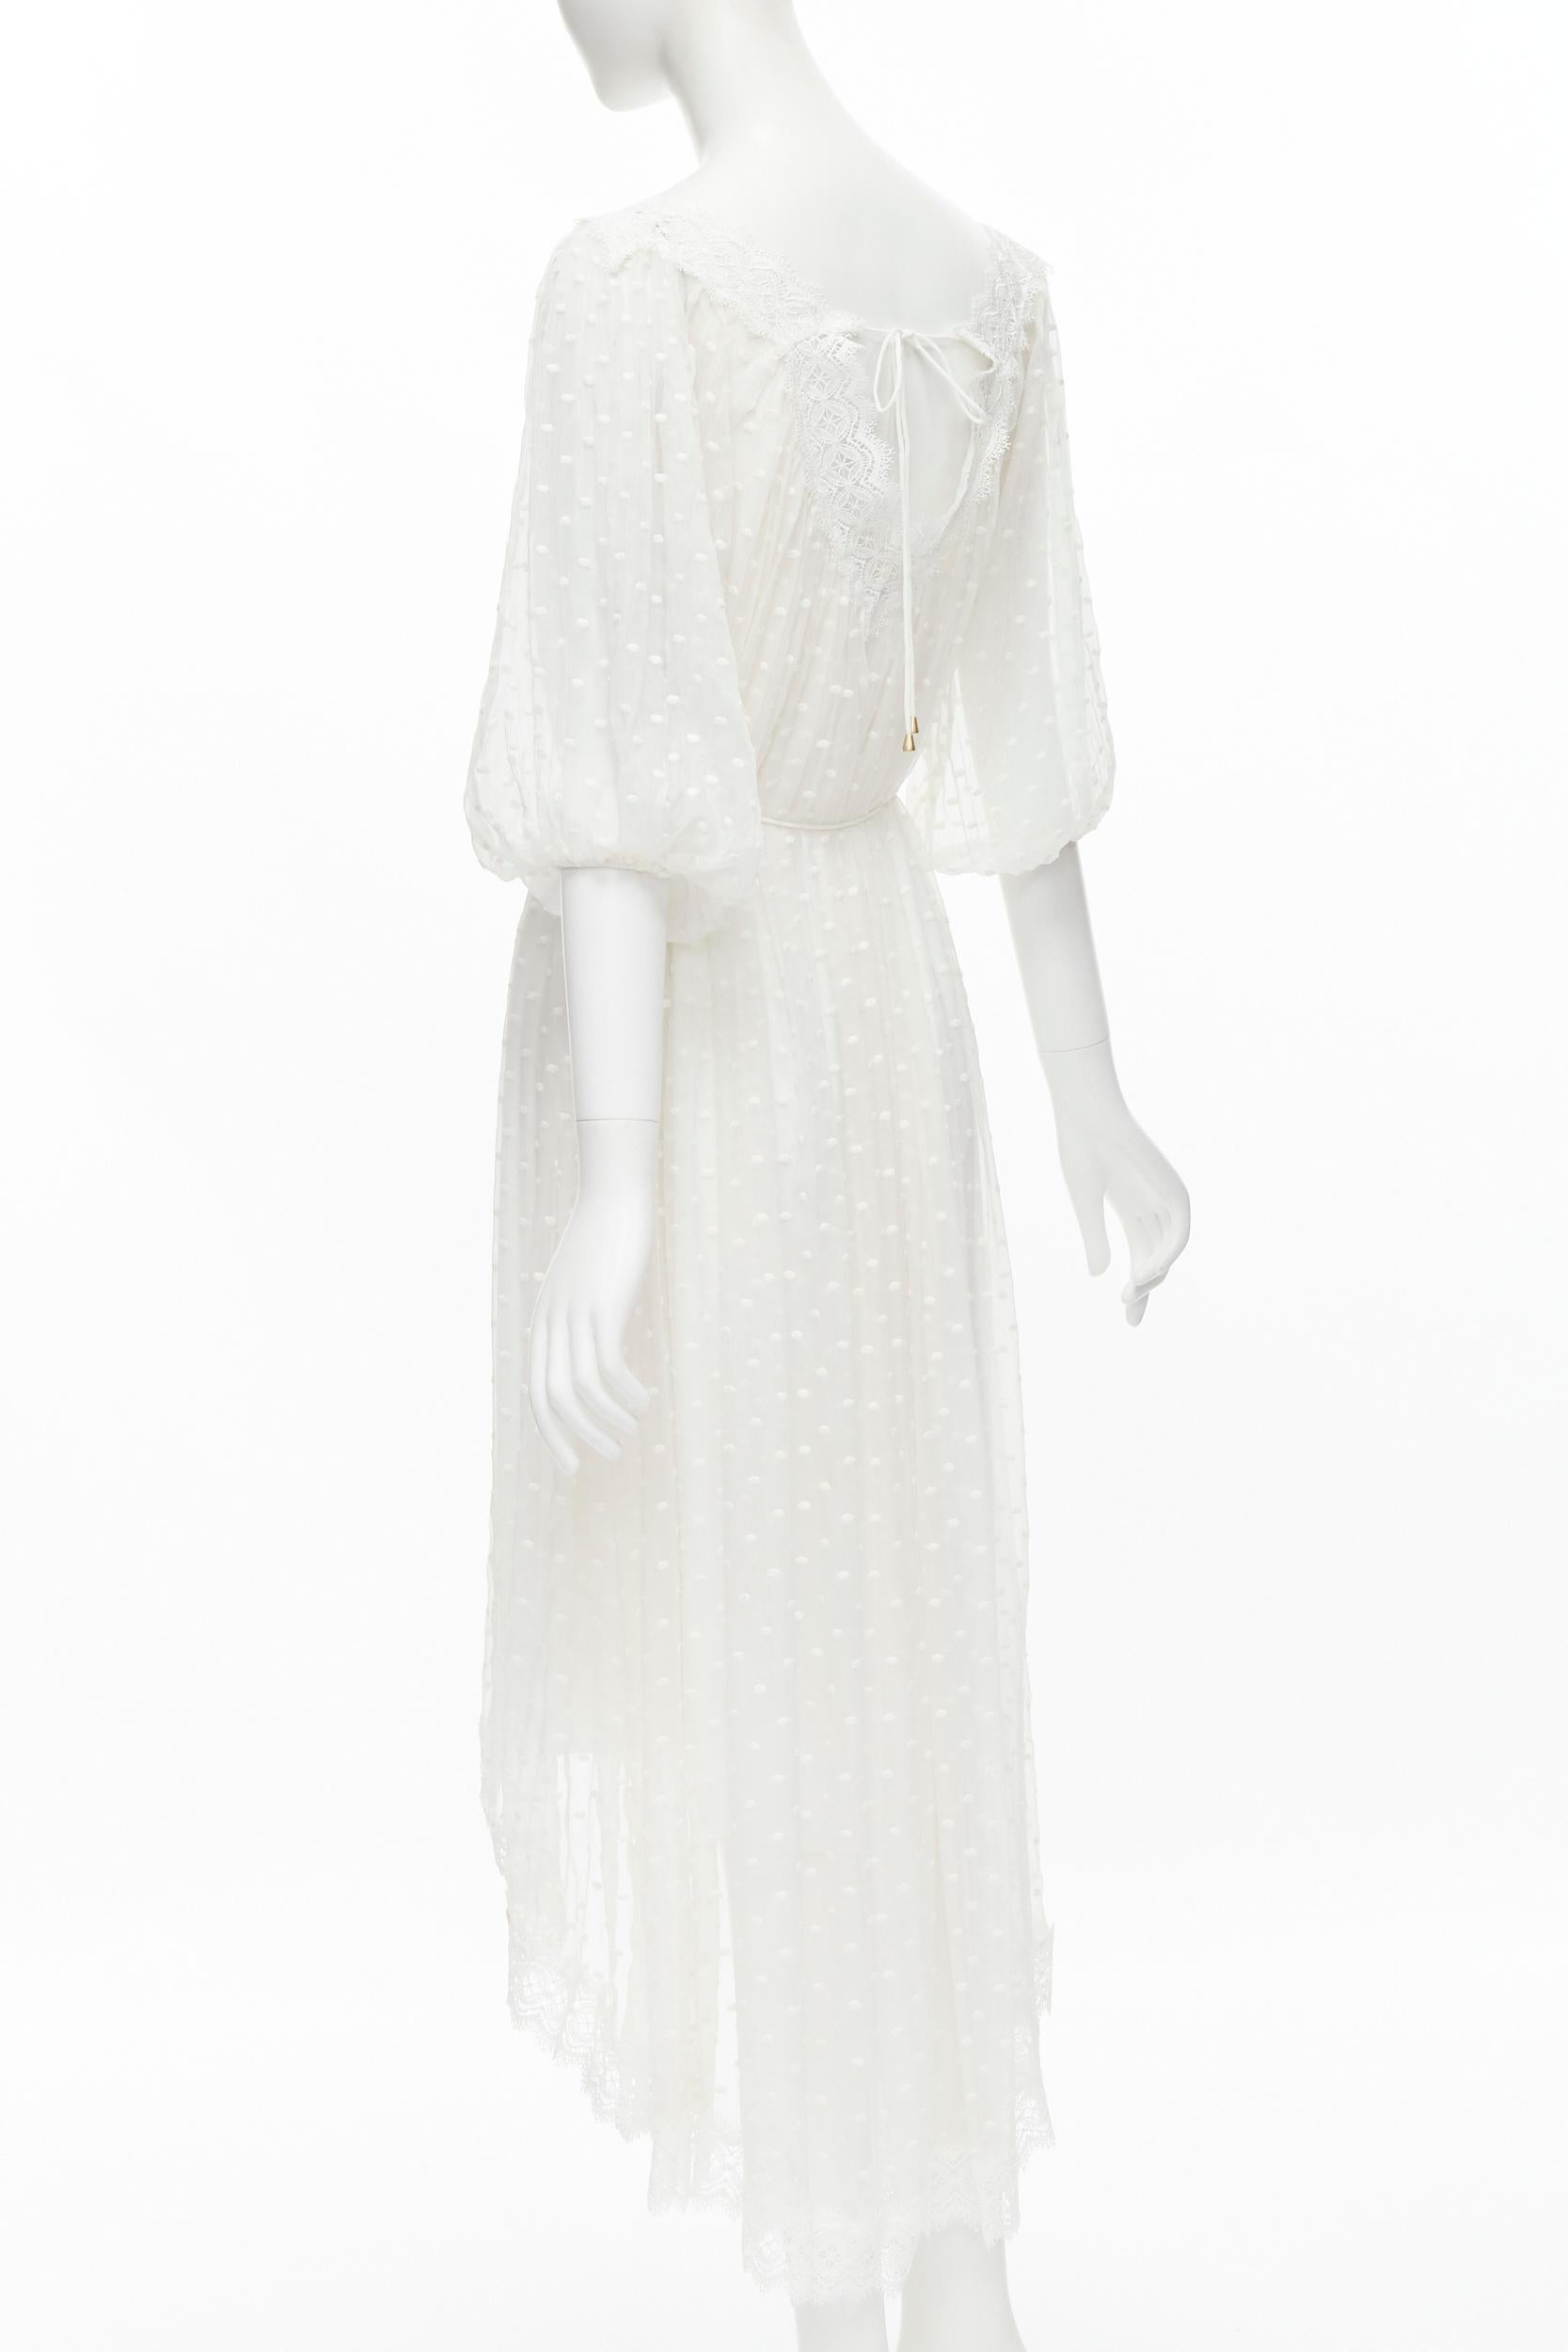 Women's ZIMMERMAN white lace trim polka dot embroidery semi sheer boho dress US0 XS